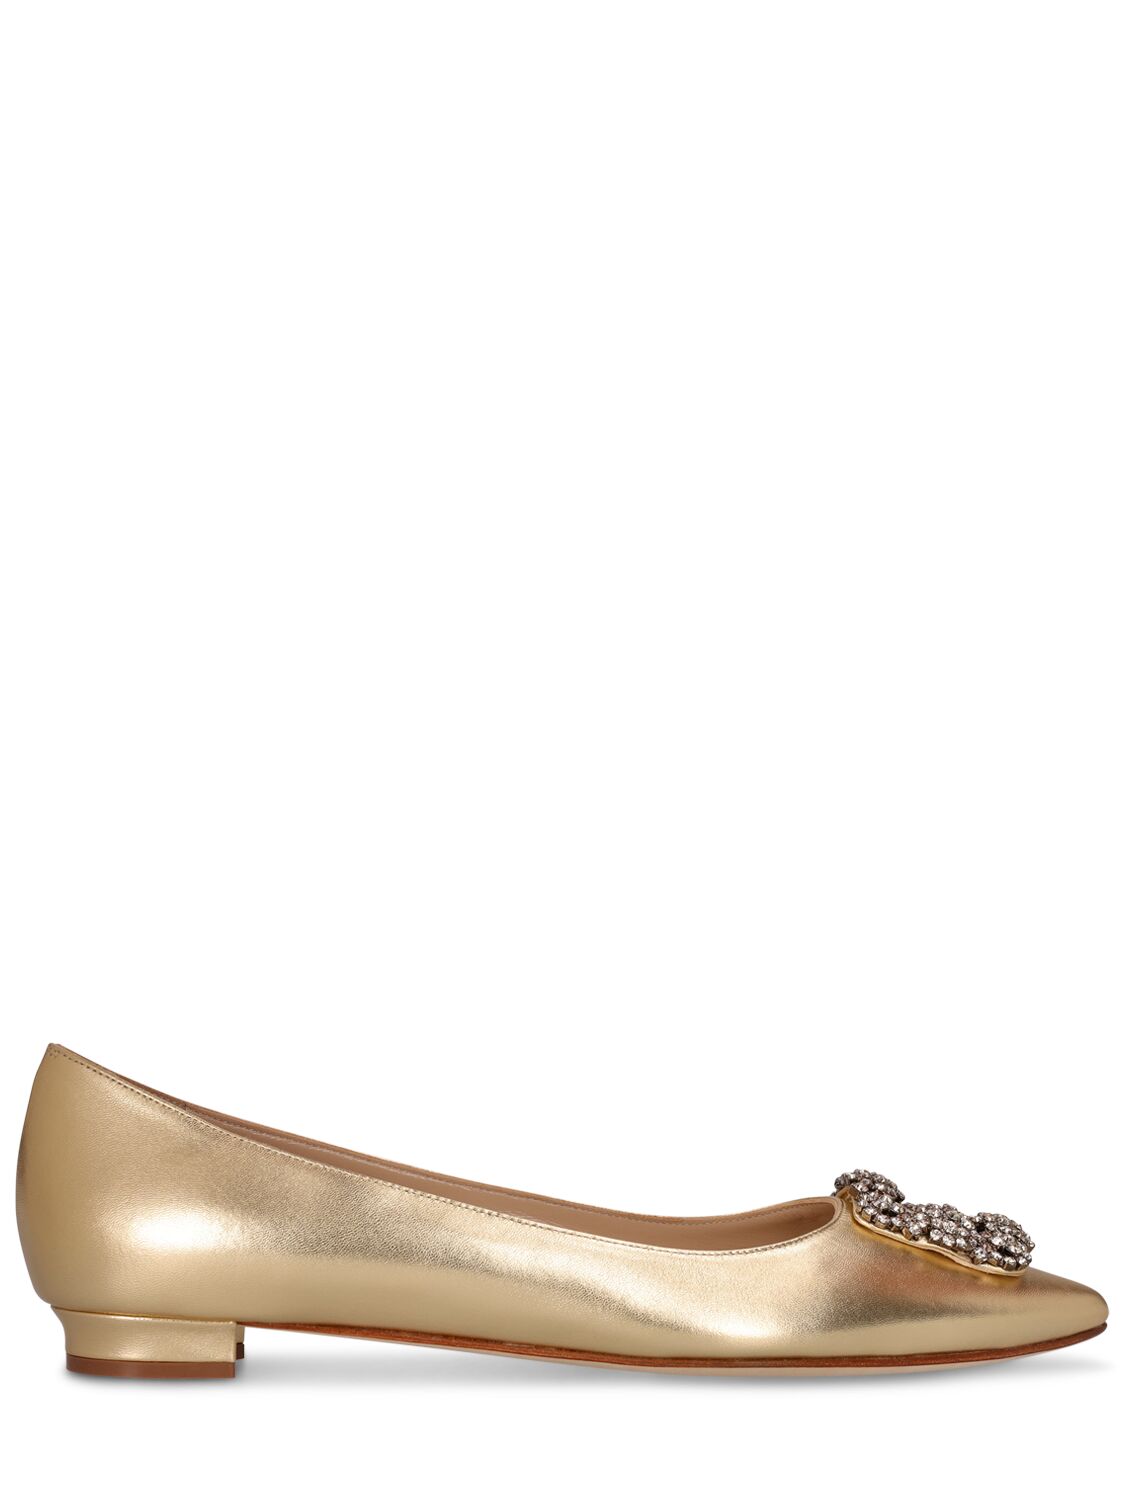 Manolo Blahnik 10毫米hangisiflat皮革芭蕾平底鞋 In Gold